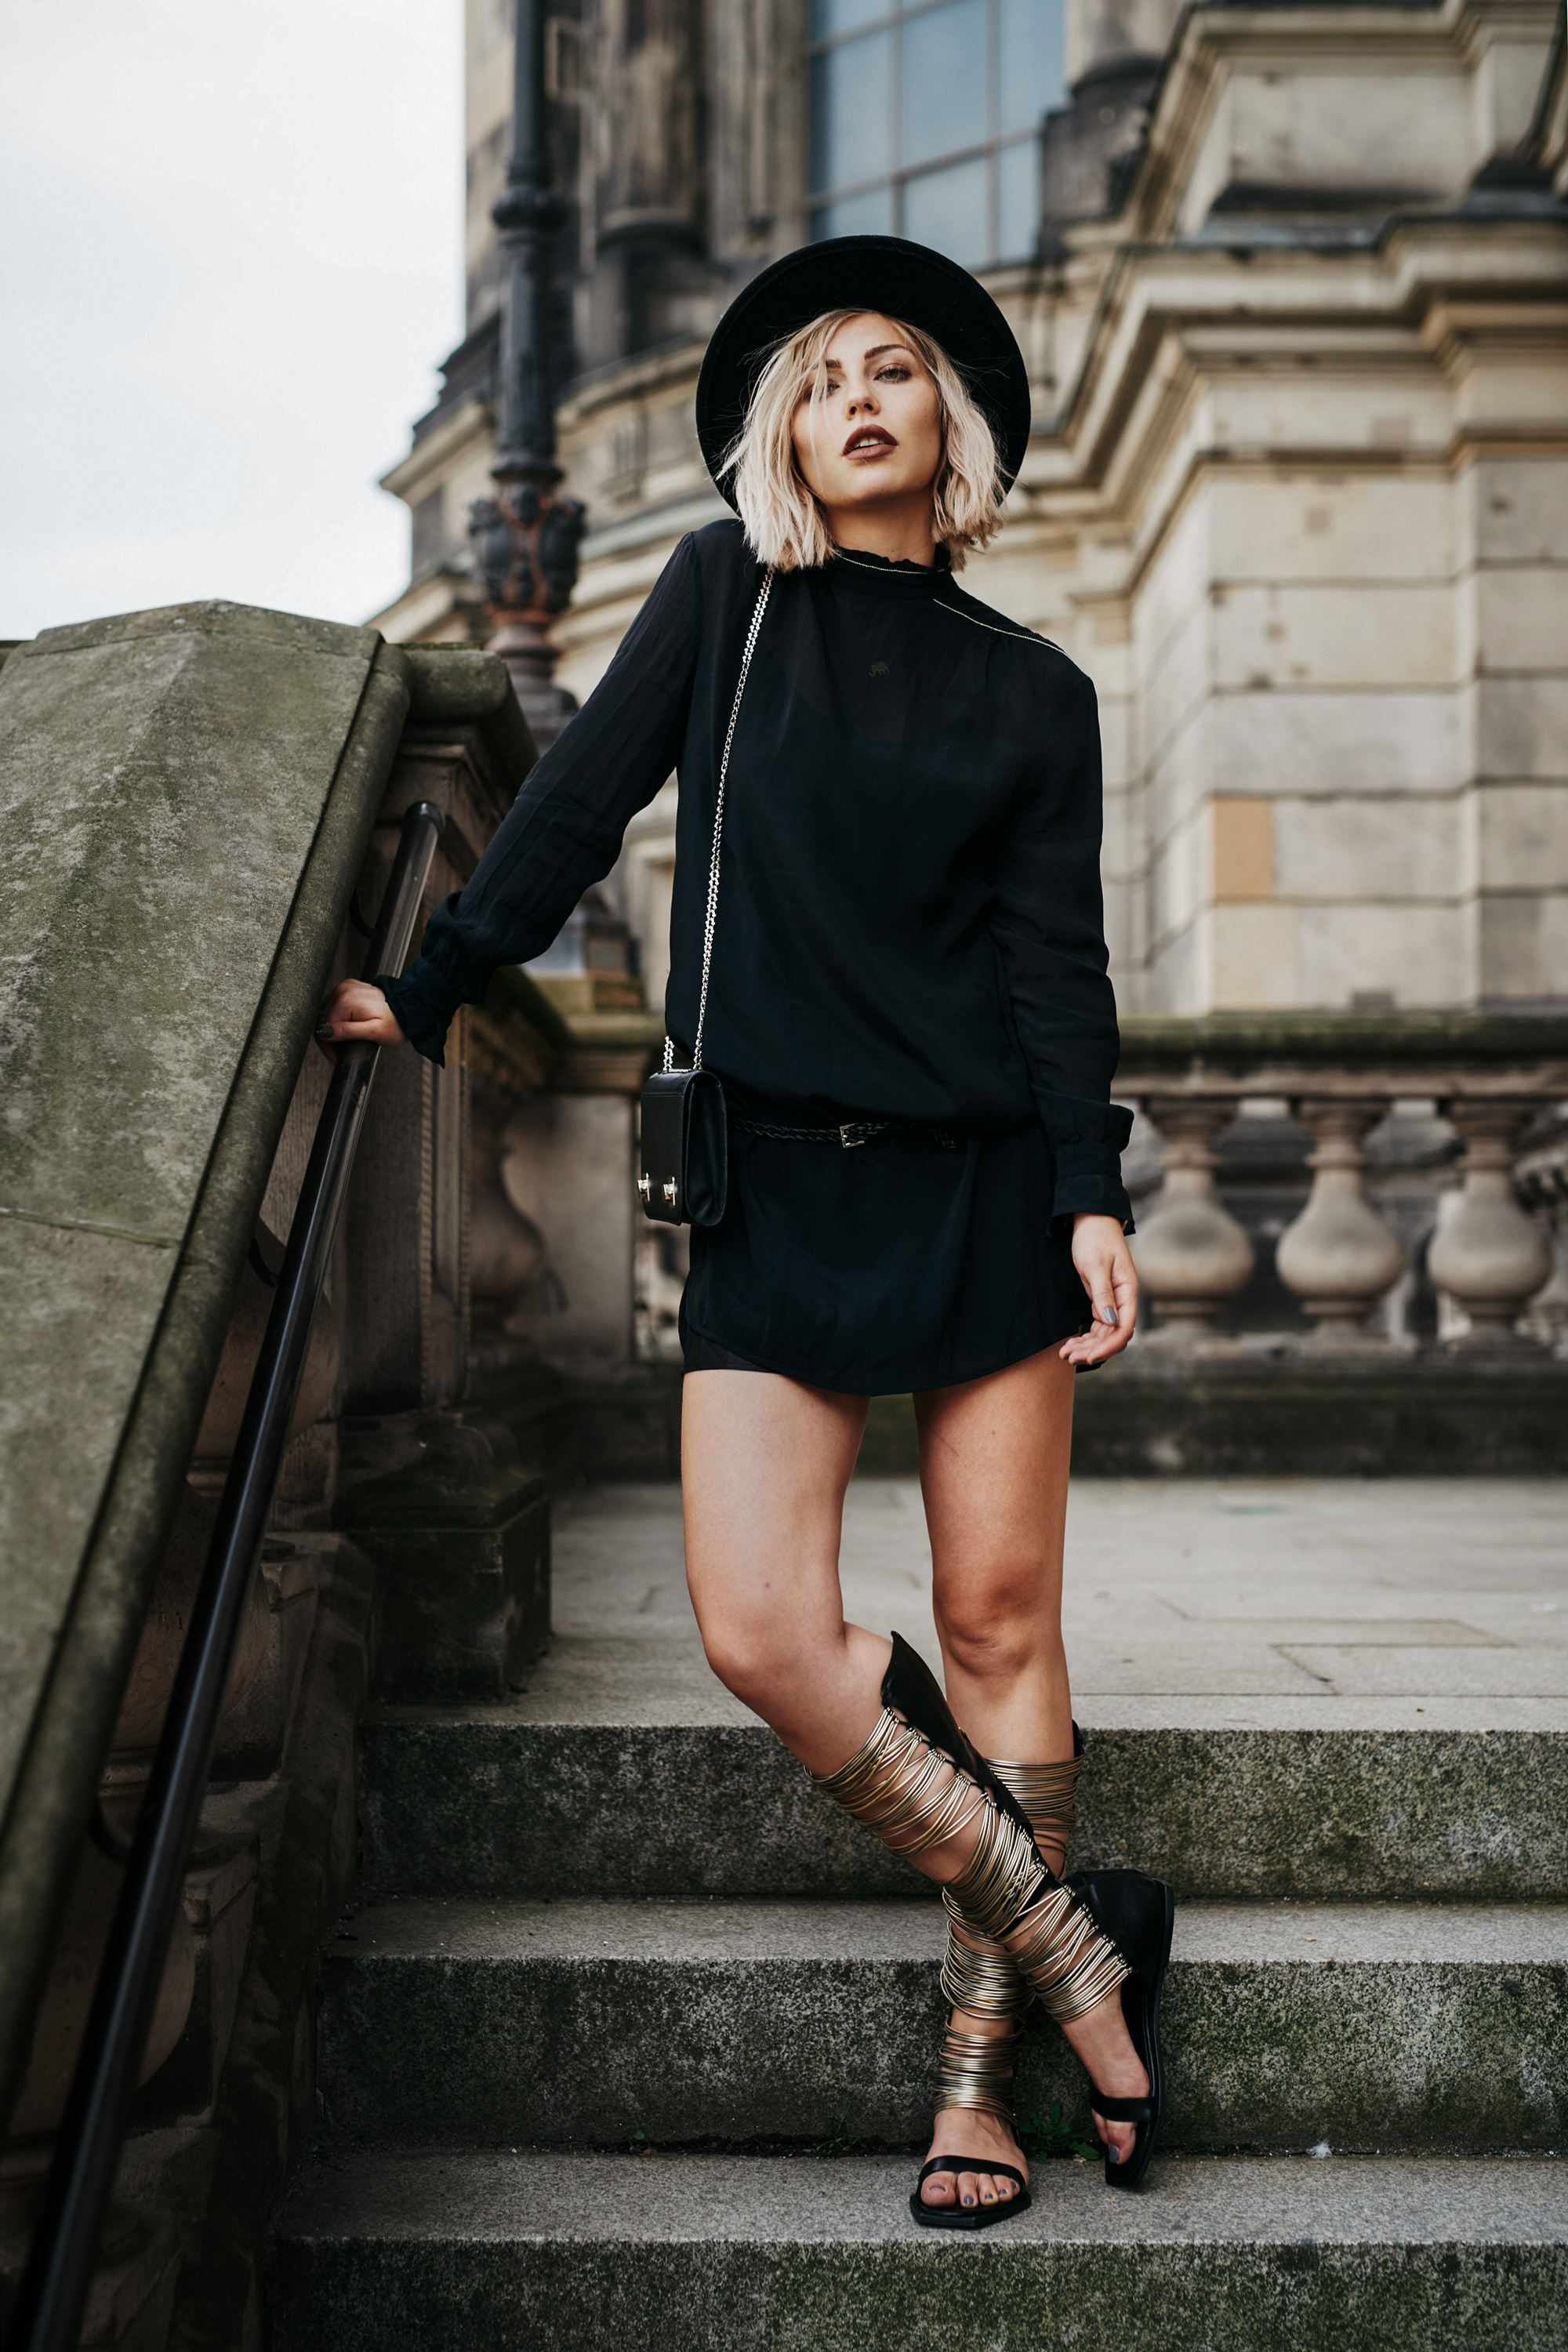 the little black dress from Baum & Pferdgarten, a scandinavian designer | style: edgy, boho, chic | vic matie metal sandals | find more pictures on my blog